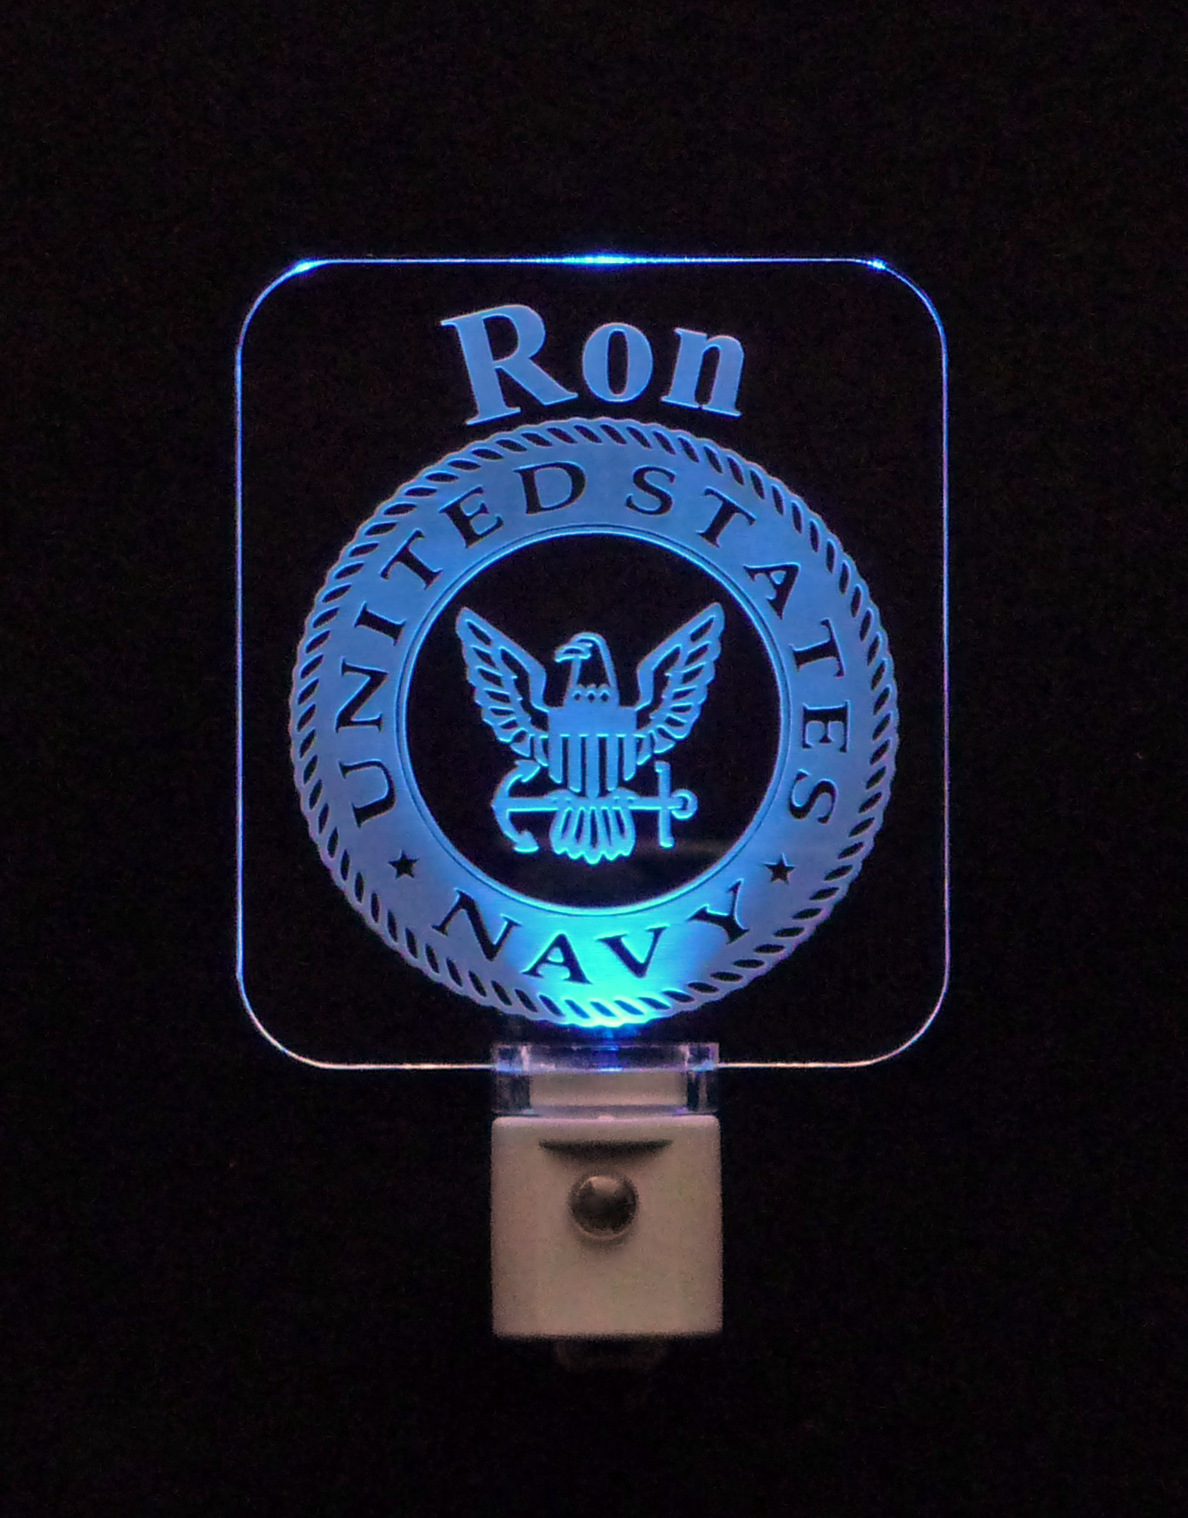 United States Navy Personalized LED Night Light, Military gift